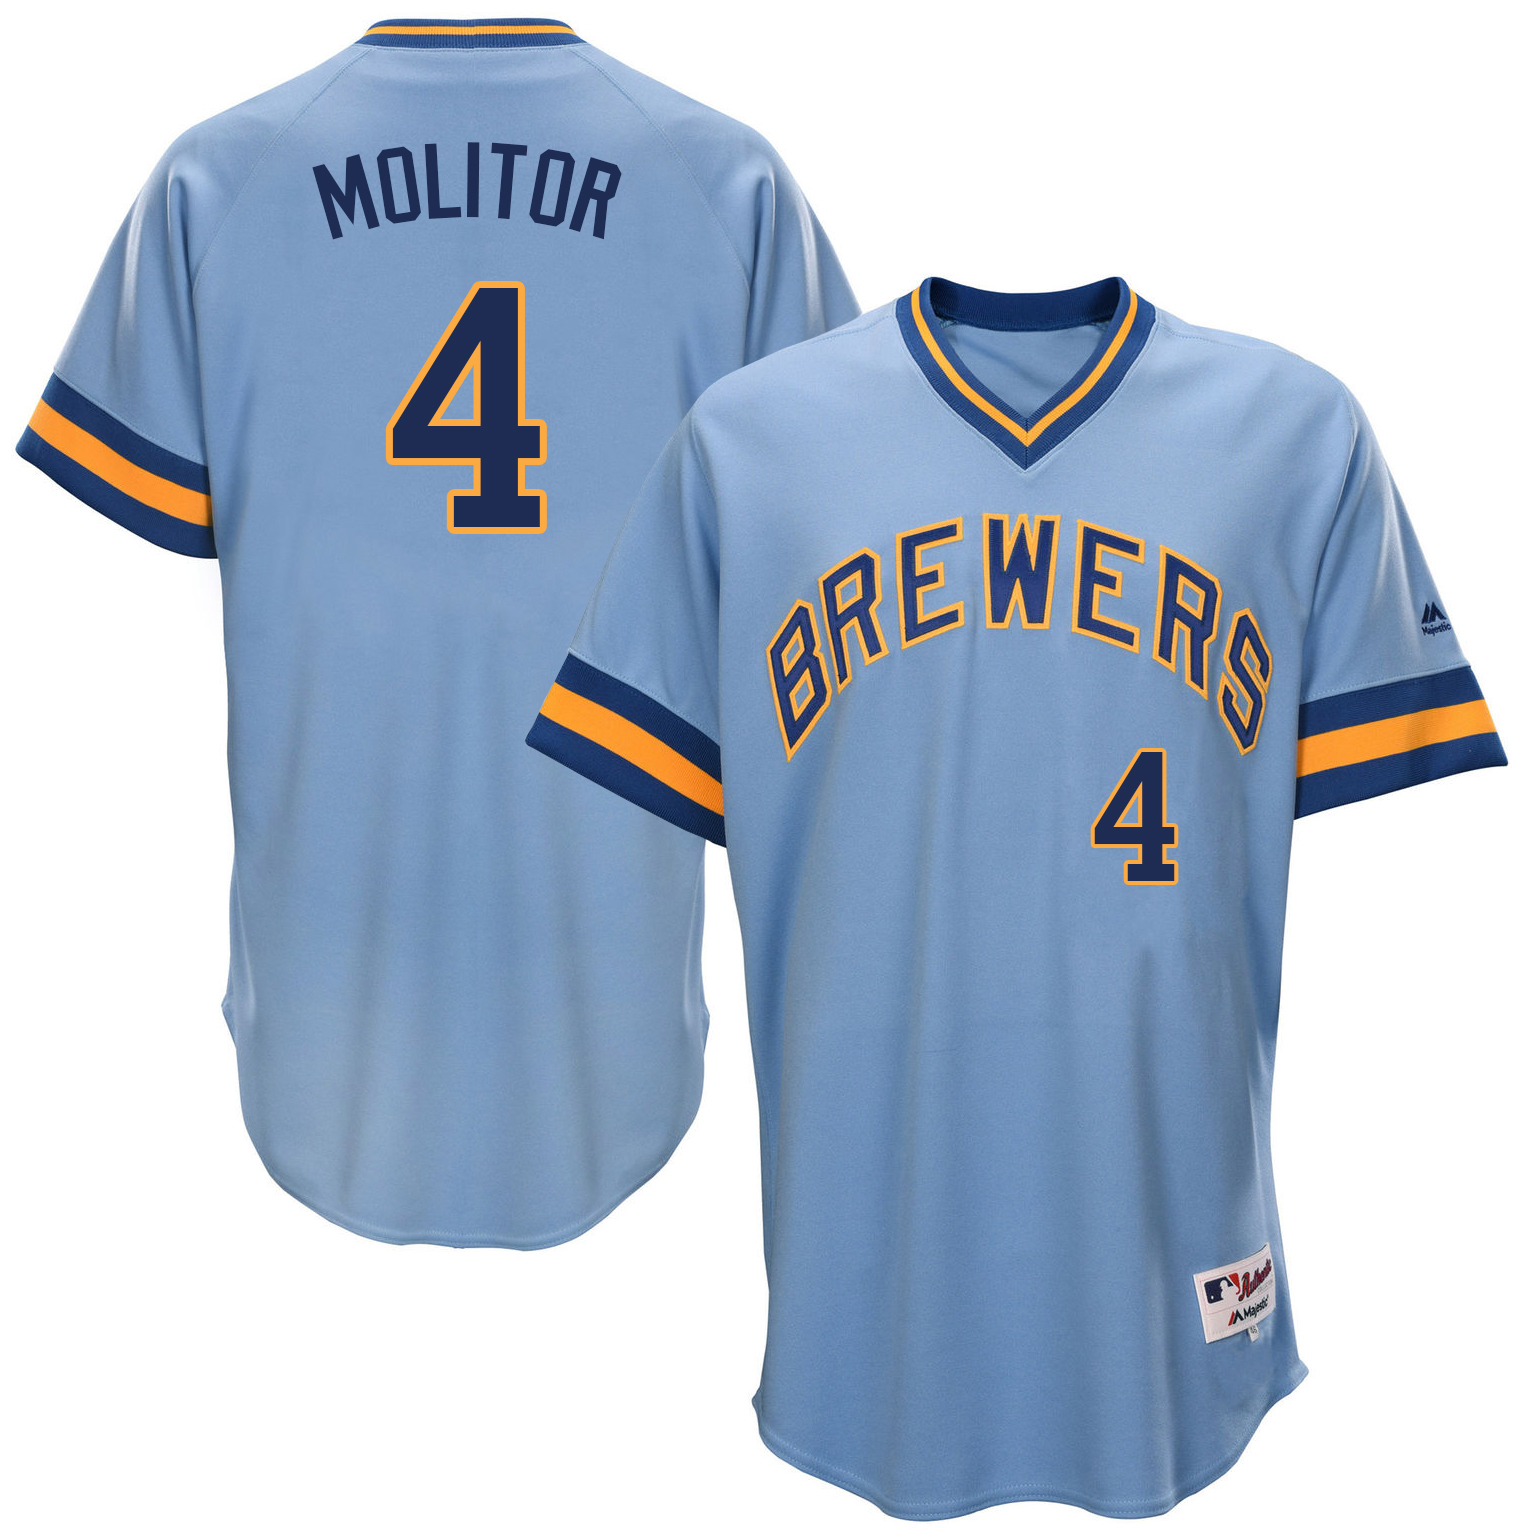 Brewers 4 Paul Molitor Light Blue Throwback Jersey